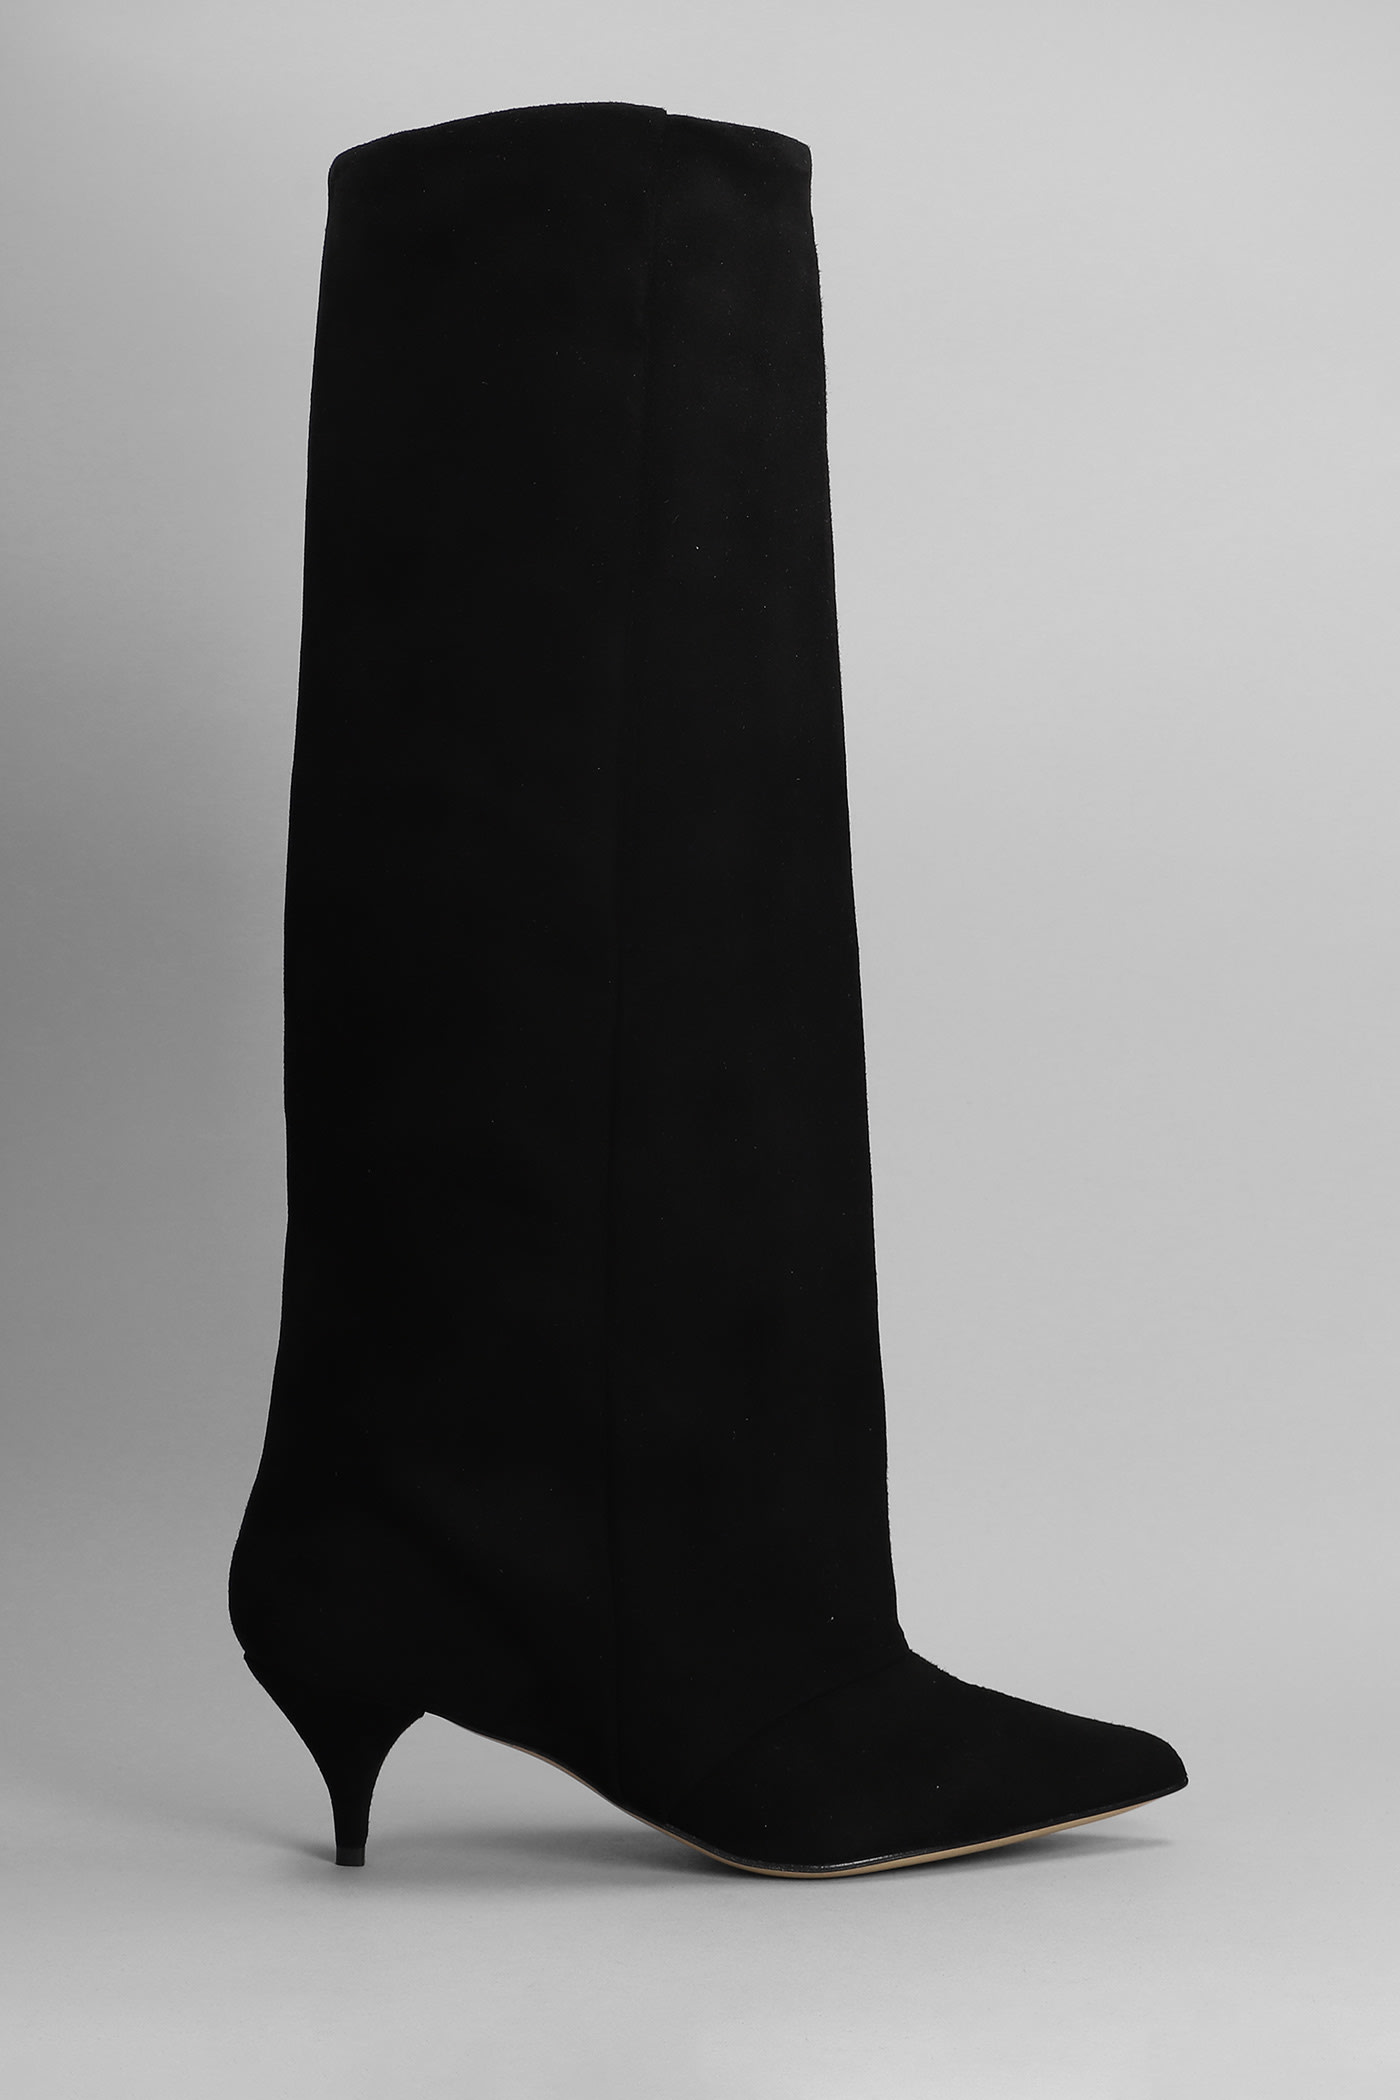 Alchimia High Heels Boots In Black Suede